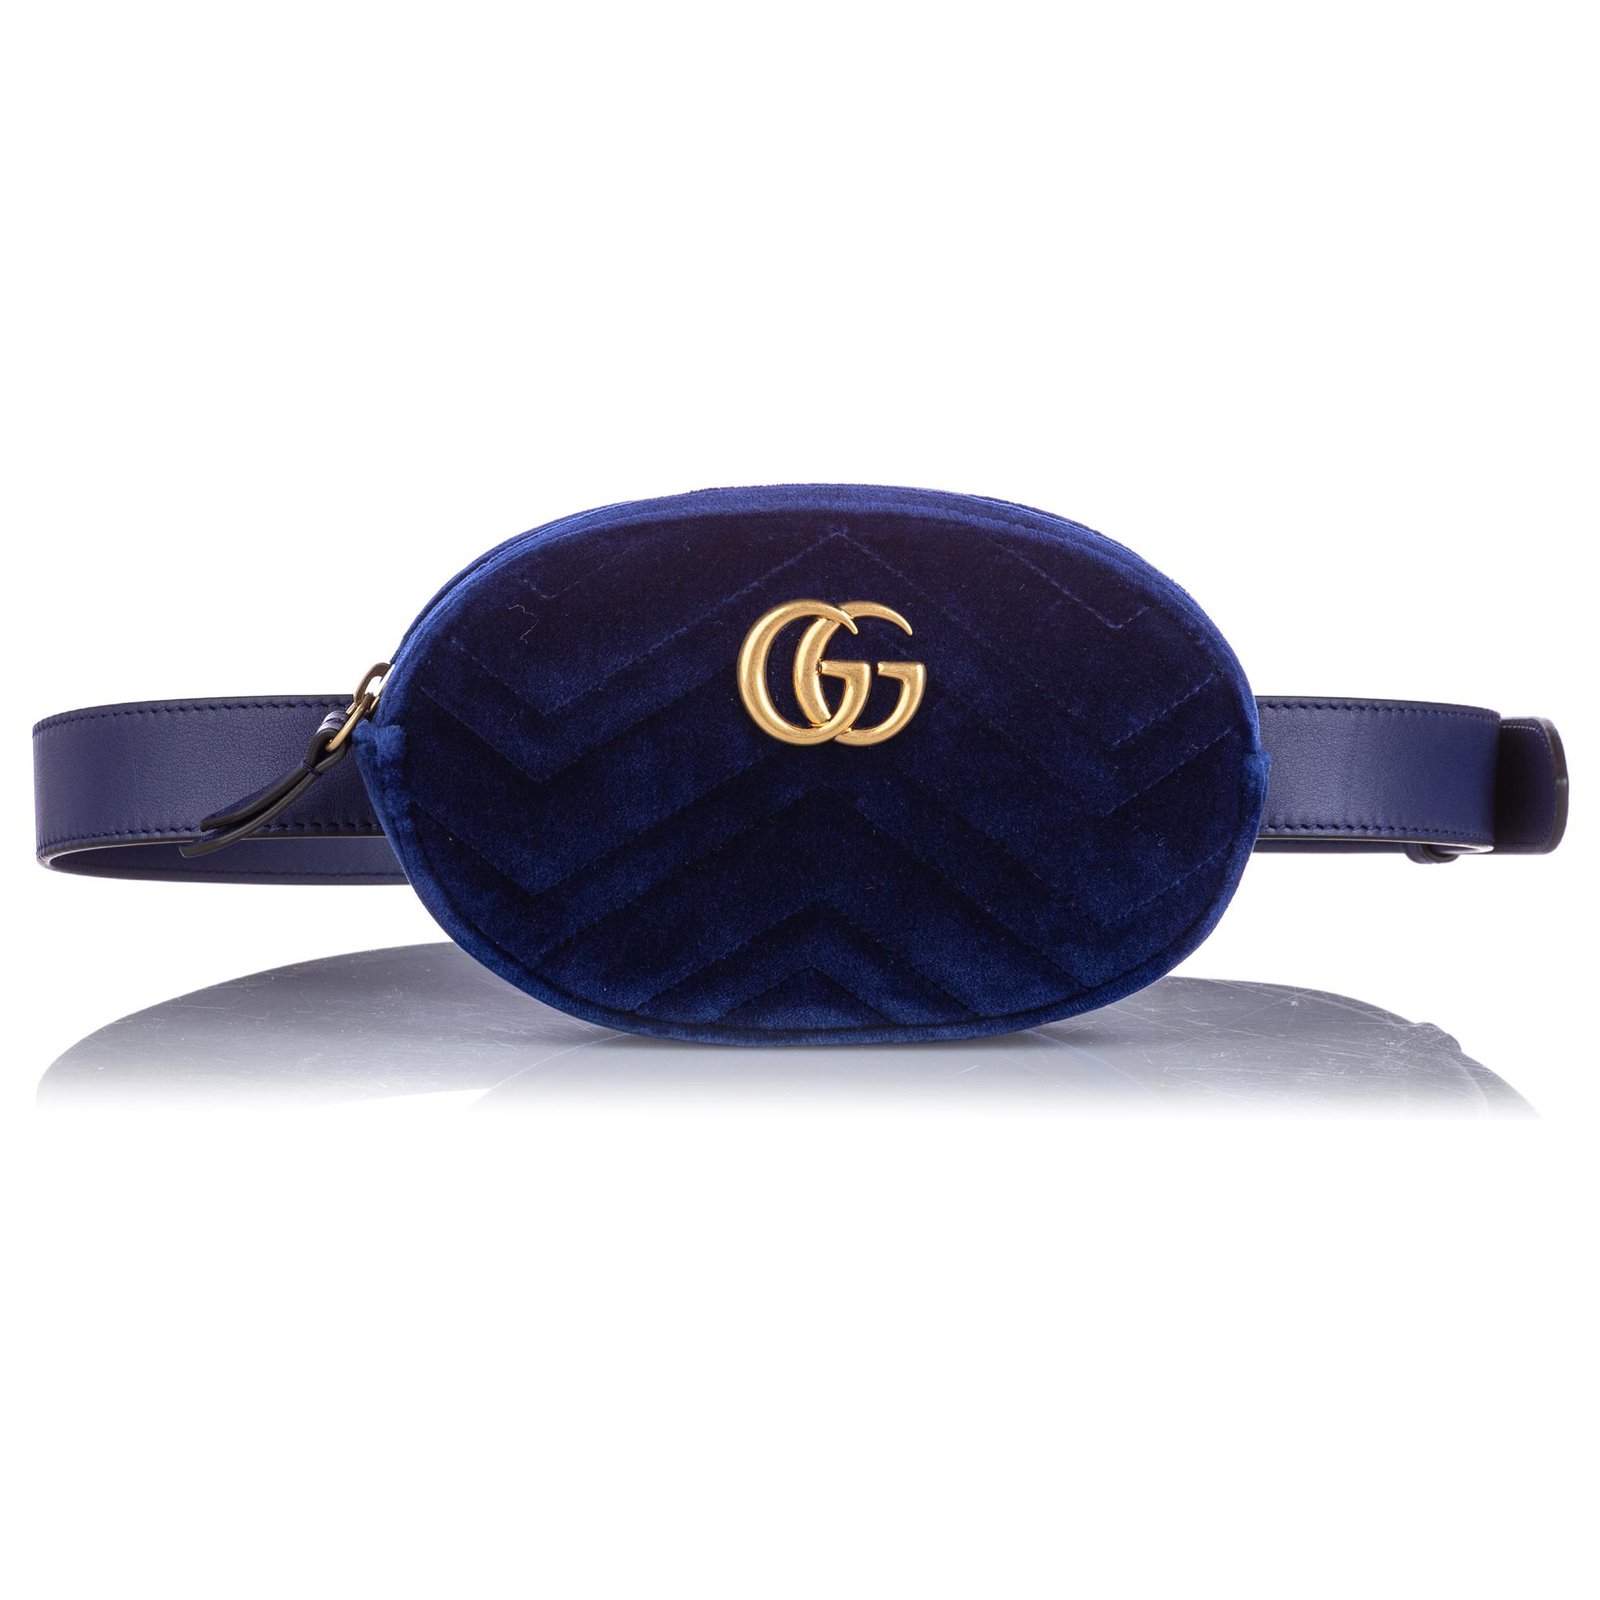 gucci belt bag blue